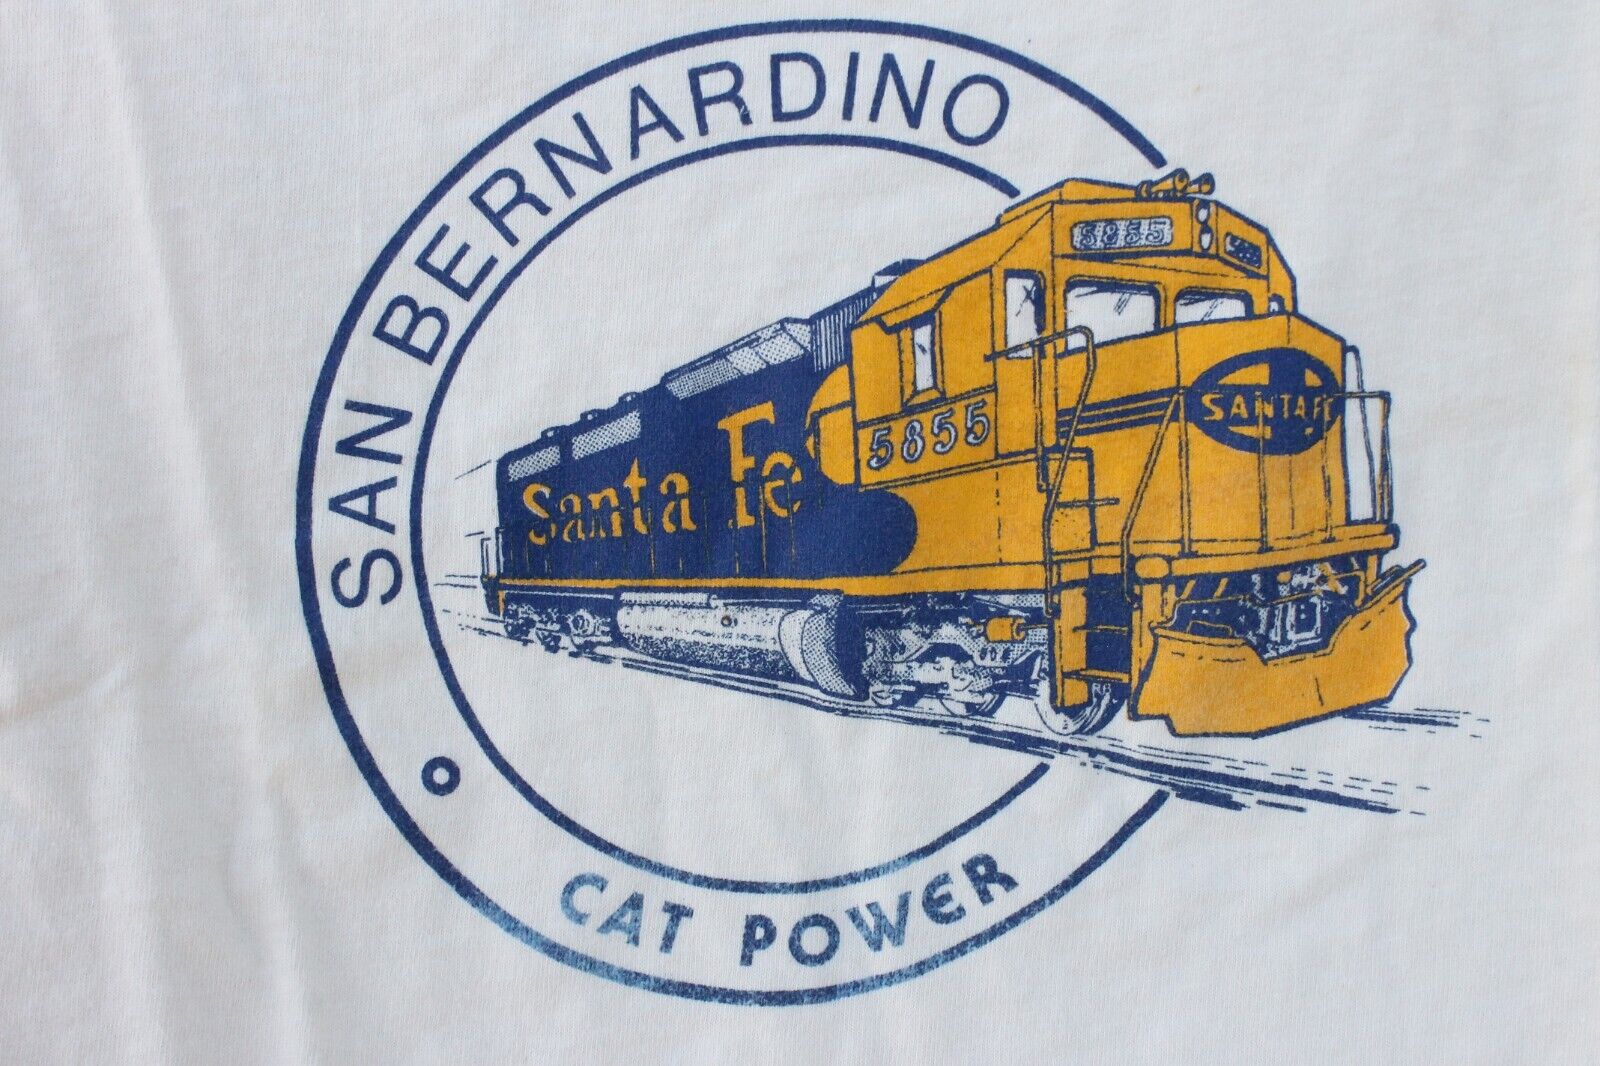 ~~~ VINTAGE SANTA FE RAILROAD SAN BERNARDINO CAT POWER LARGE 42-44 ~~~